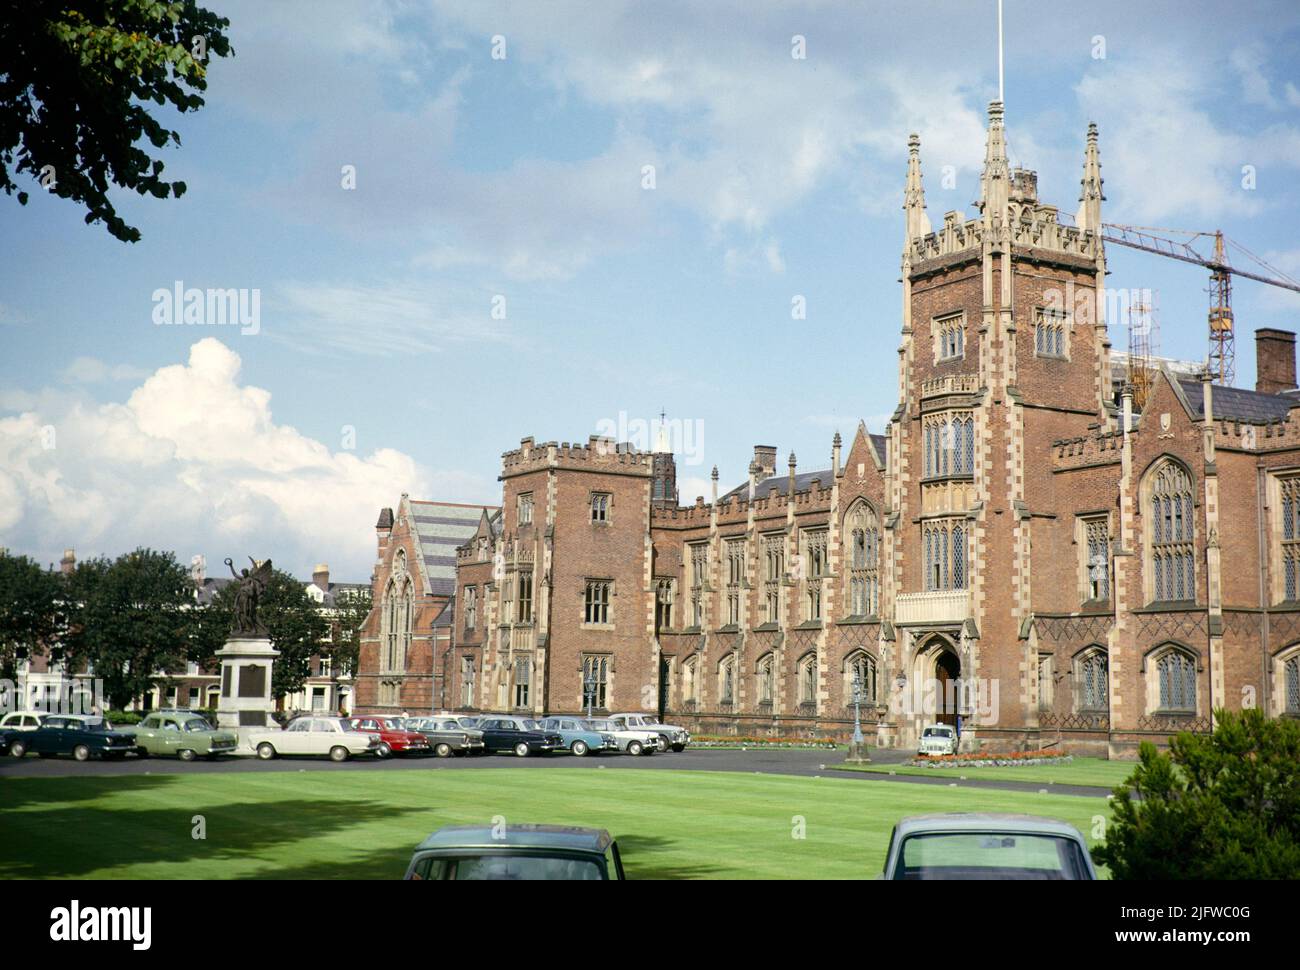 Cars parked in front of Queen's University, Belfast, Northern Ireland, UK 1960s Stock Photo